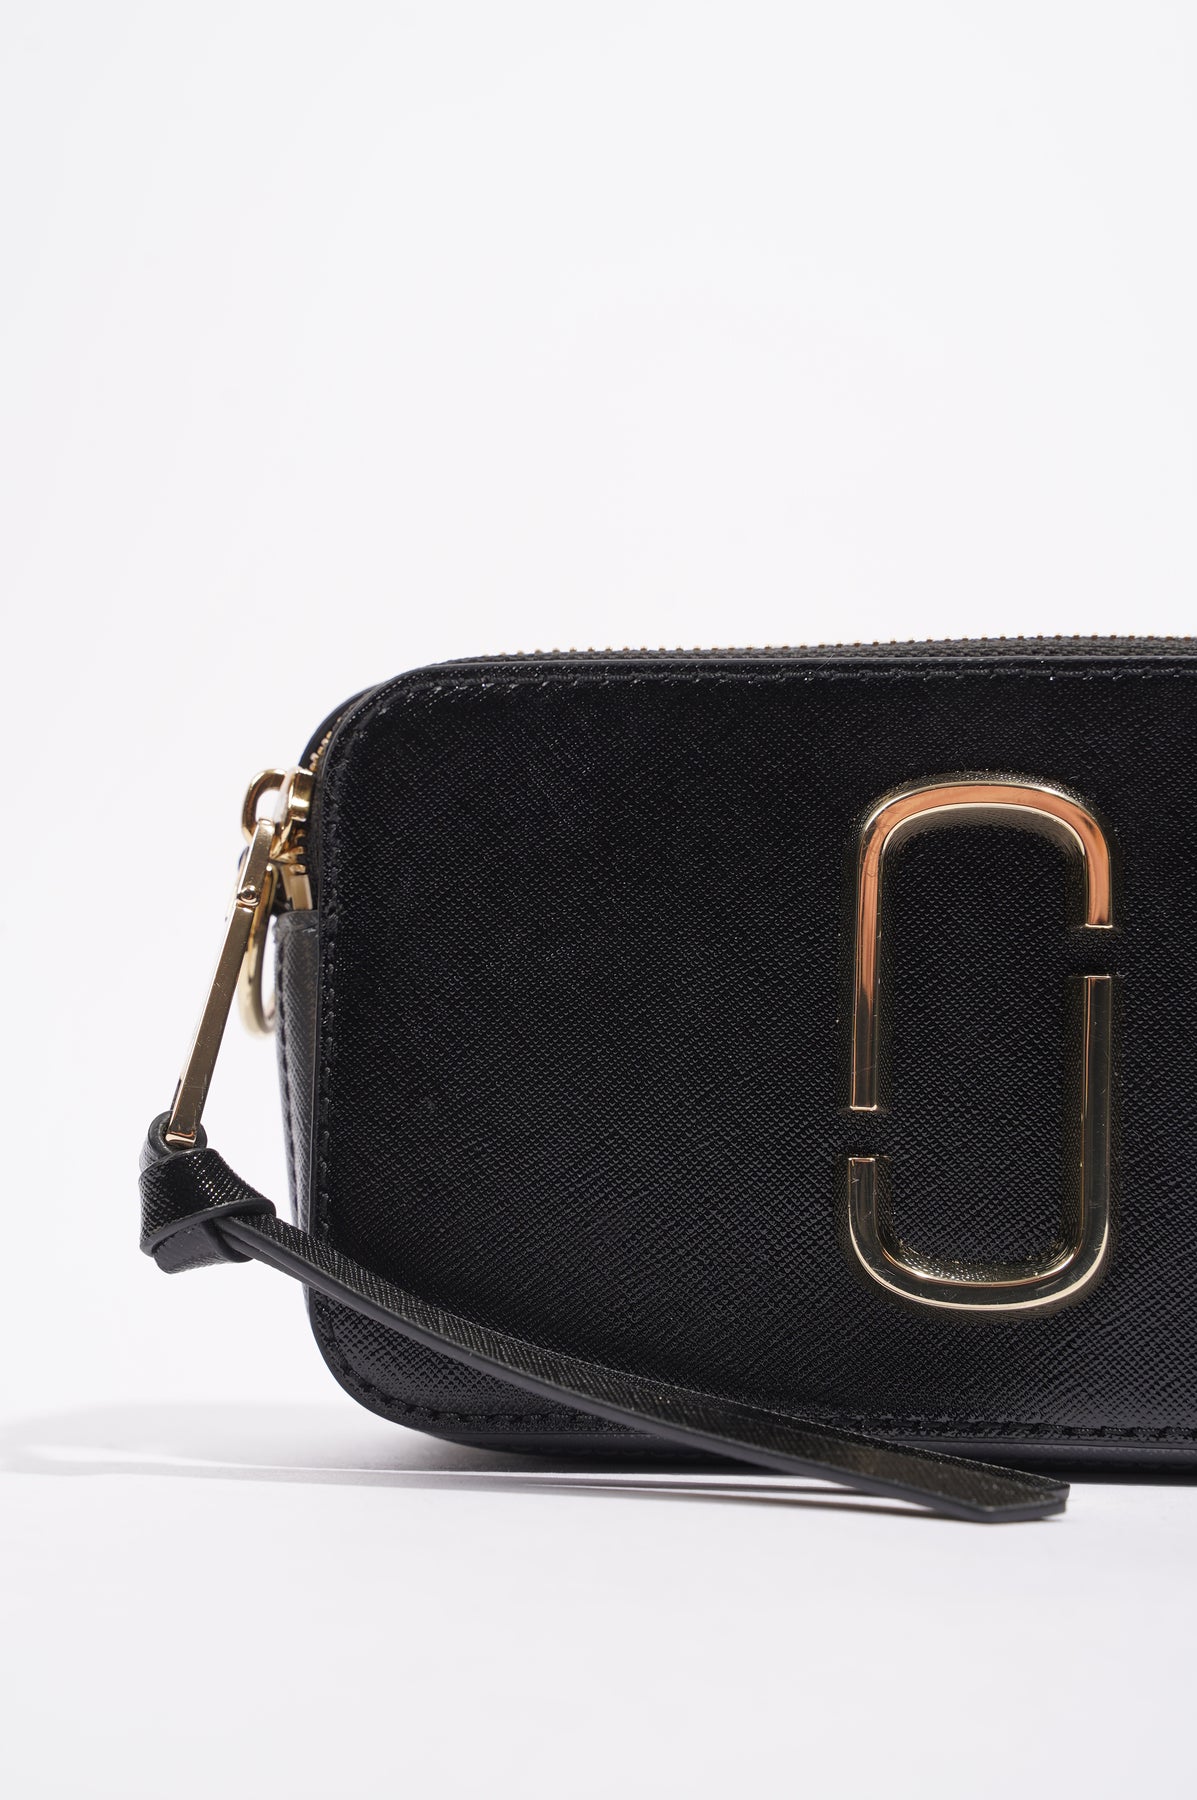 Marc Jacobs Women's The Snapshot Bag, Black/Multi, One Size: Handbags